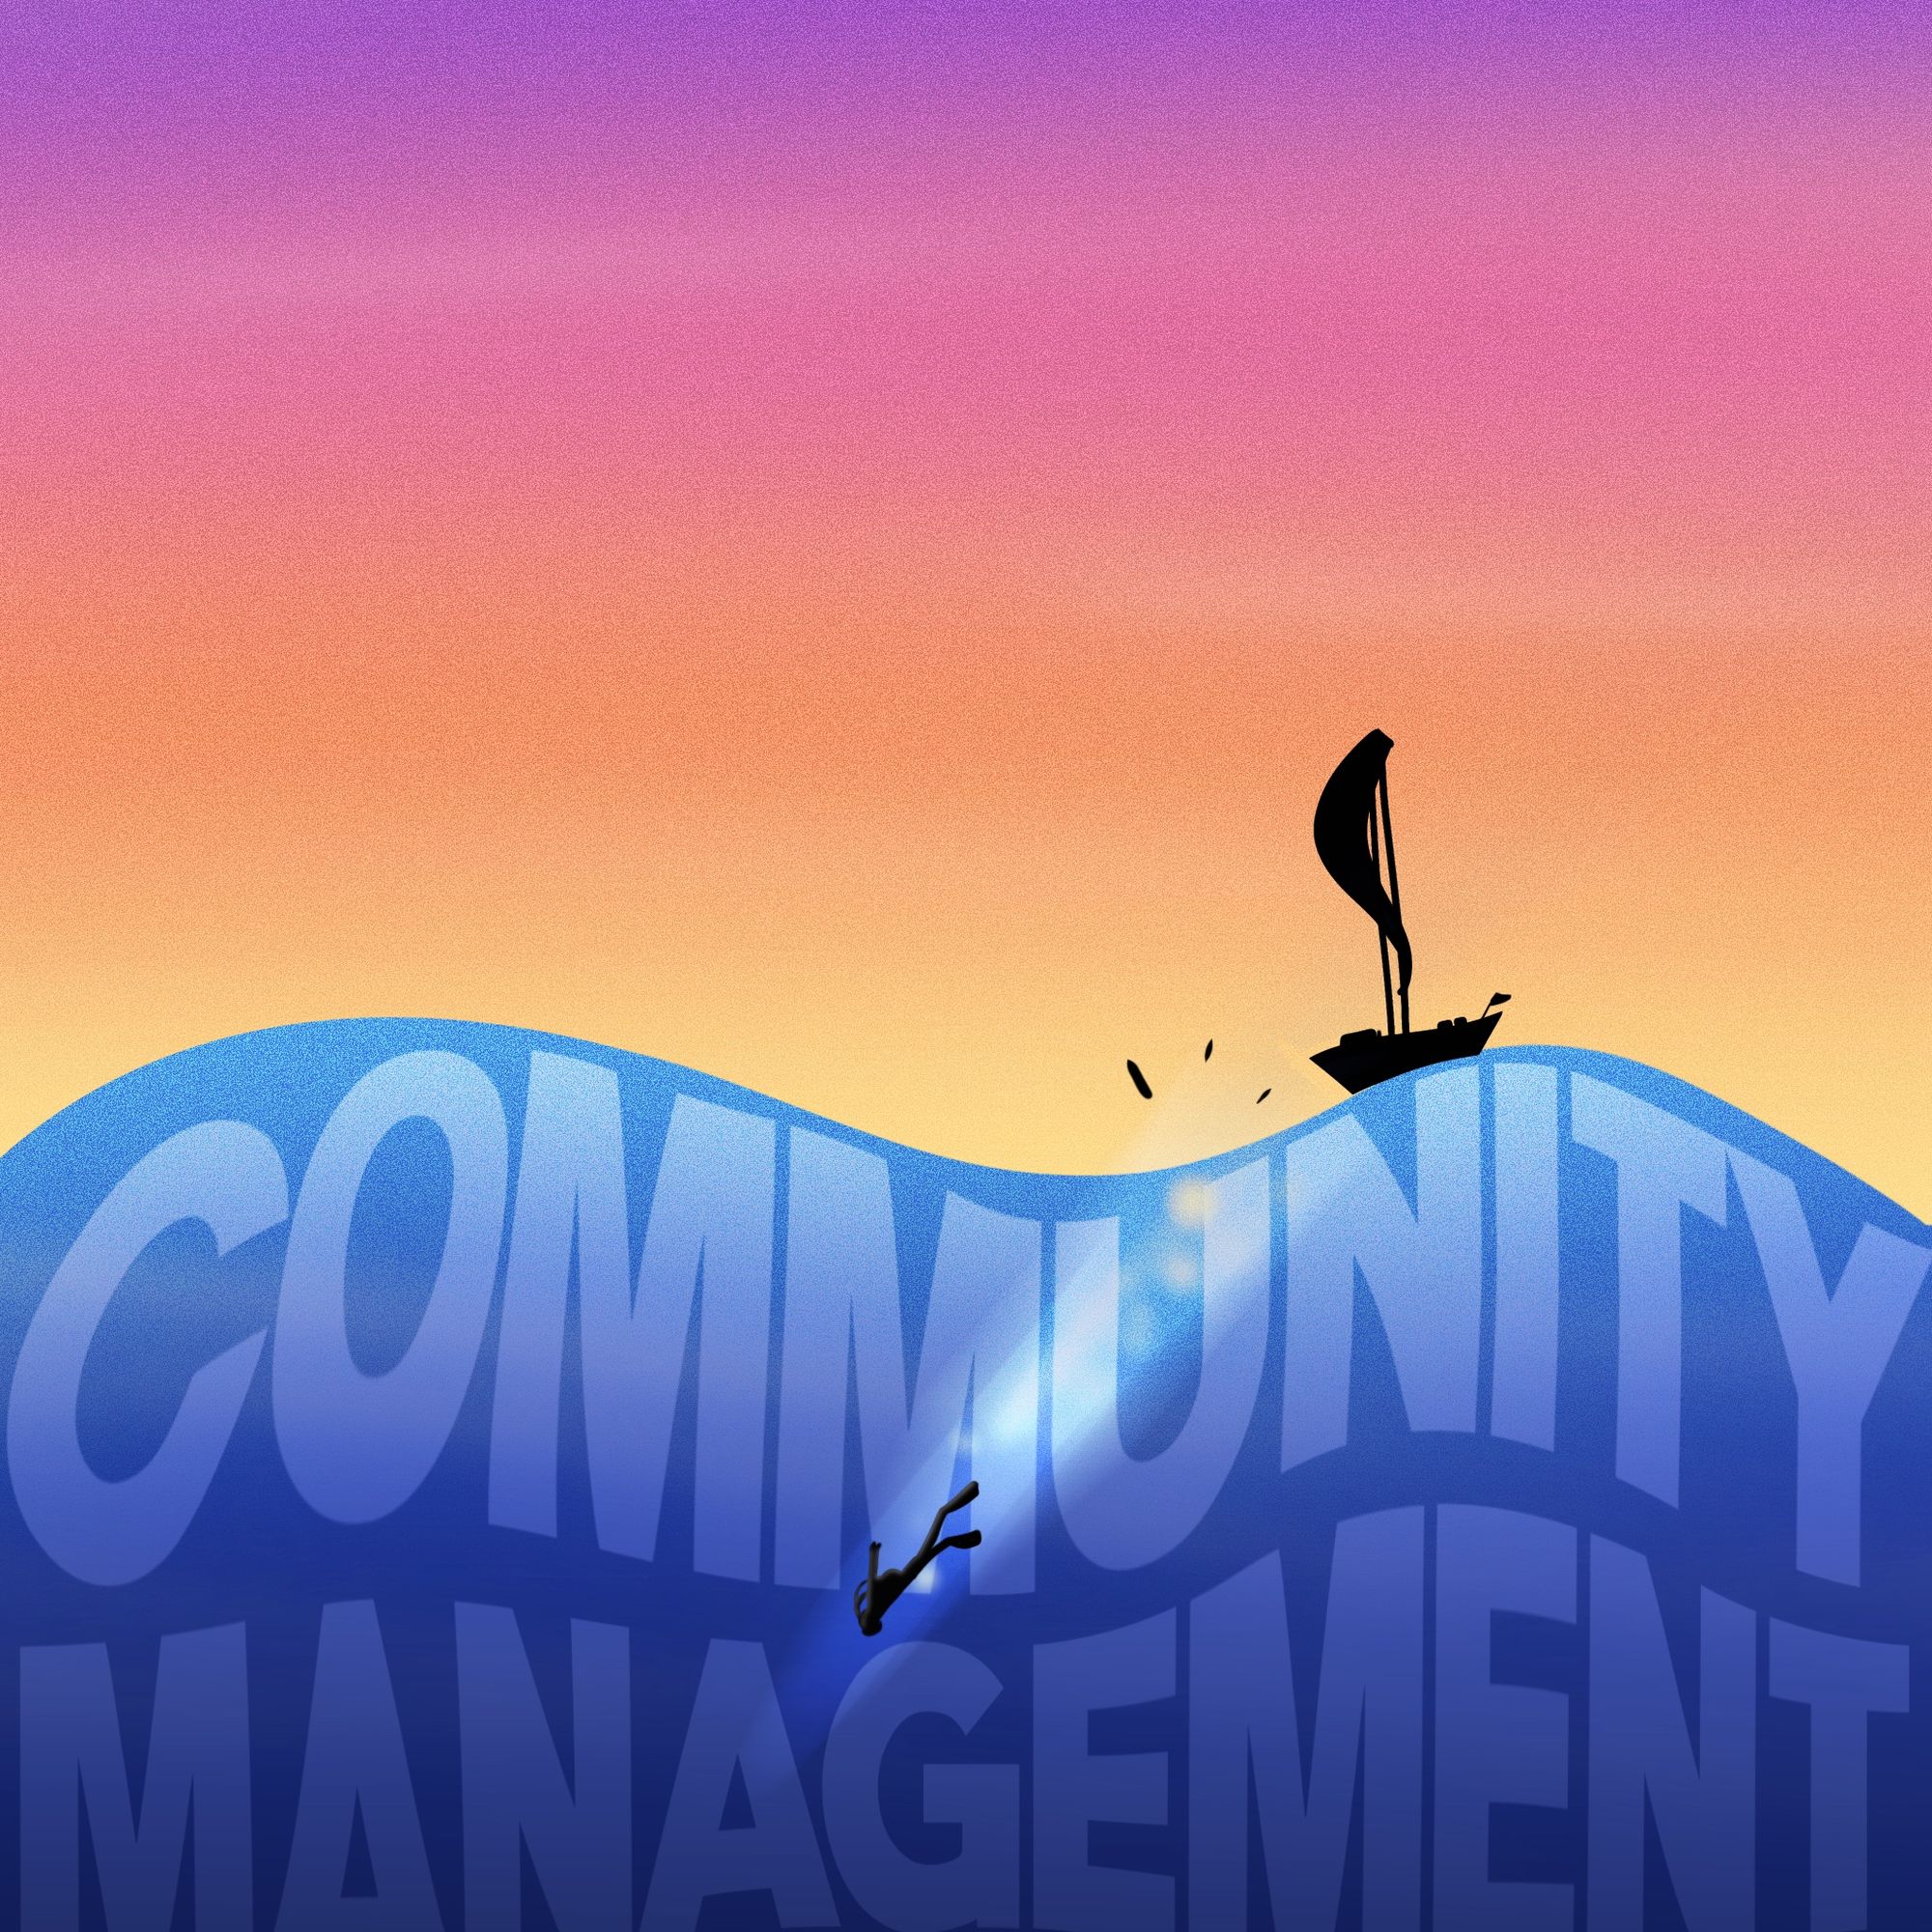 A dekko at community management